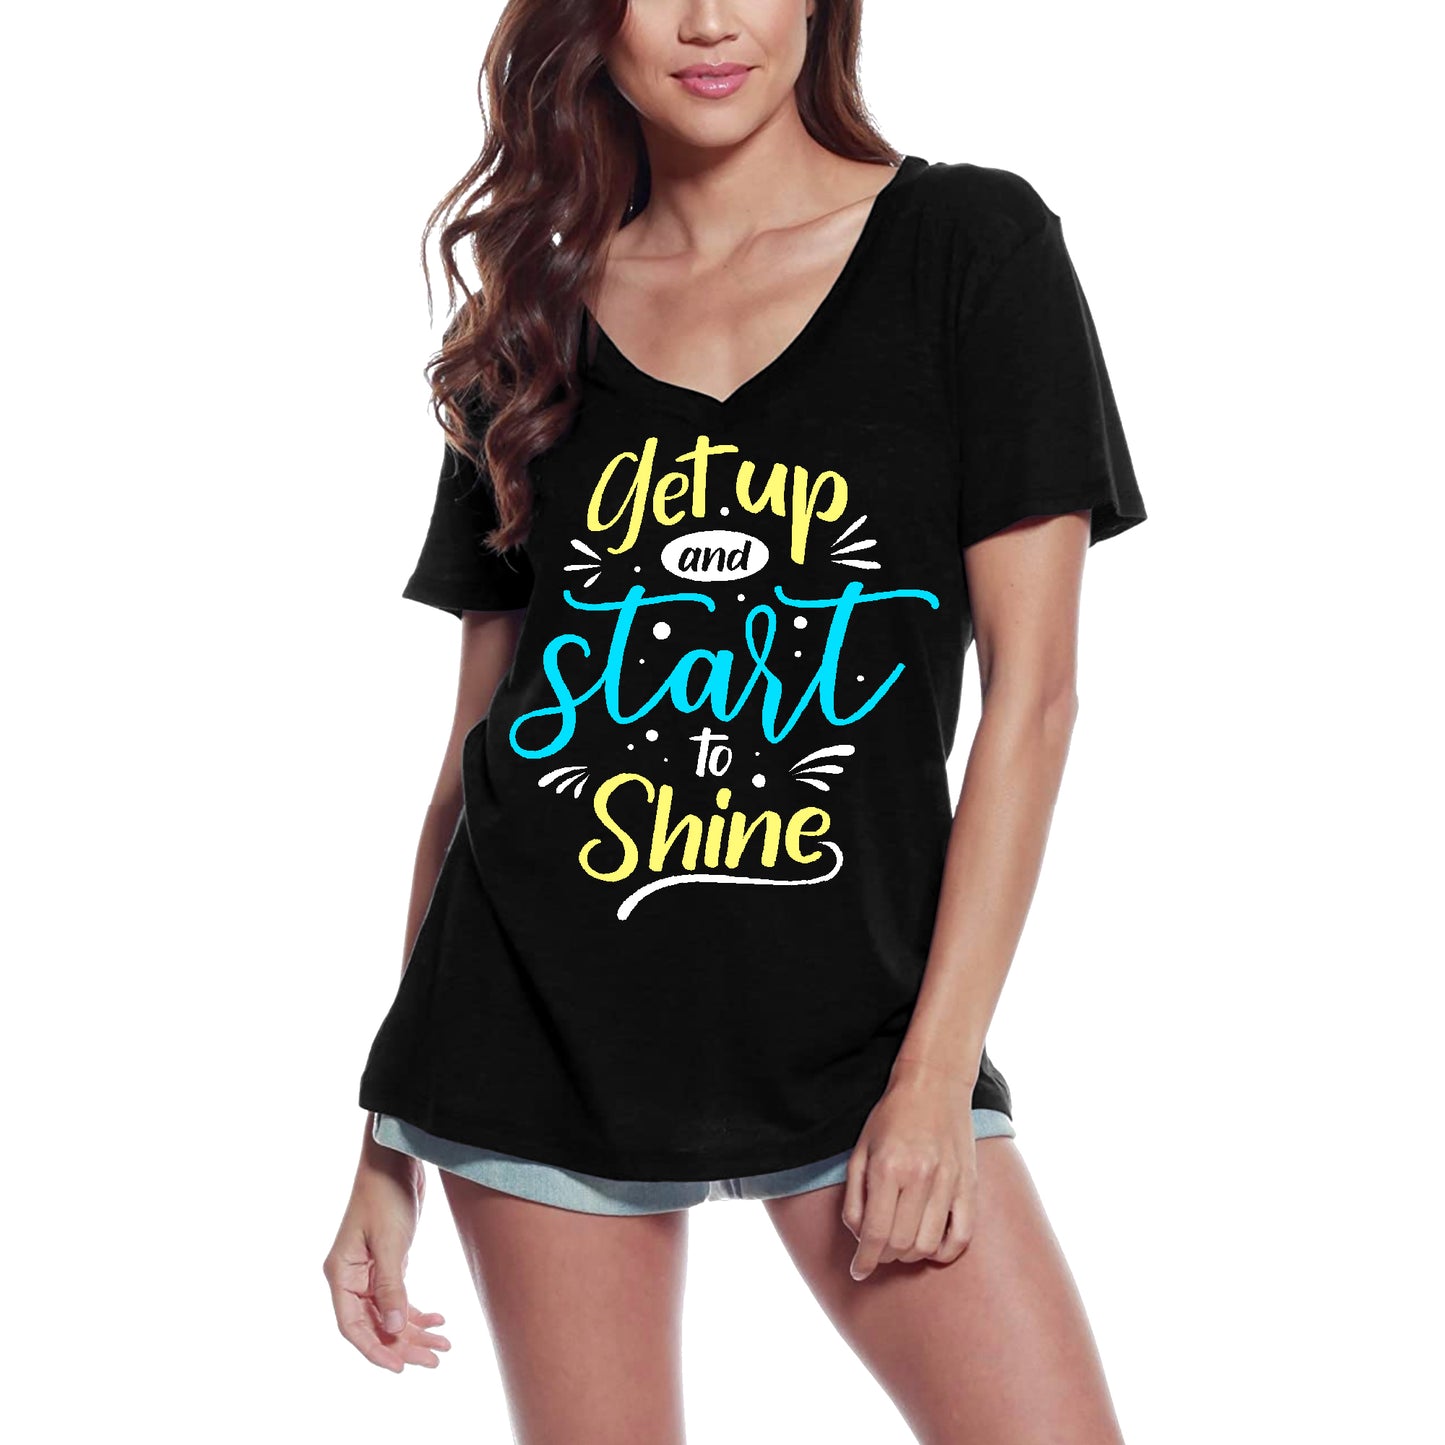 ULTRABASIC Women's T-Shirt Get Up and Start to Shine - Motivational Quote Shirt